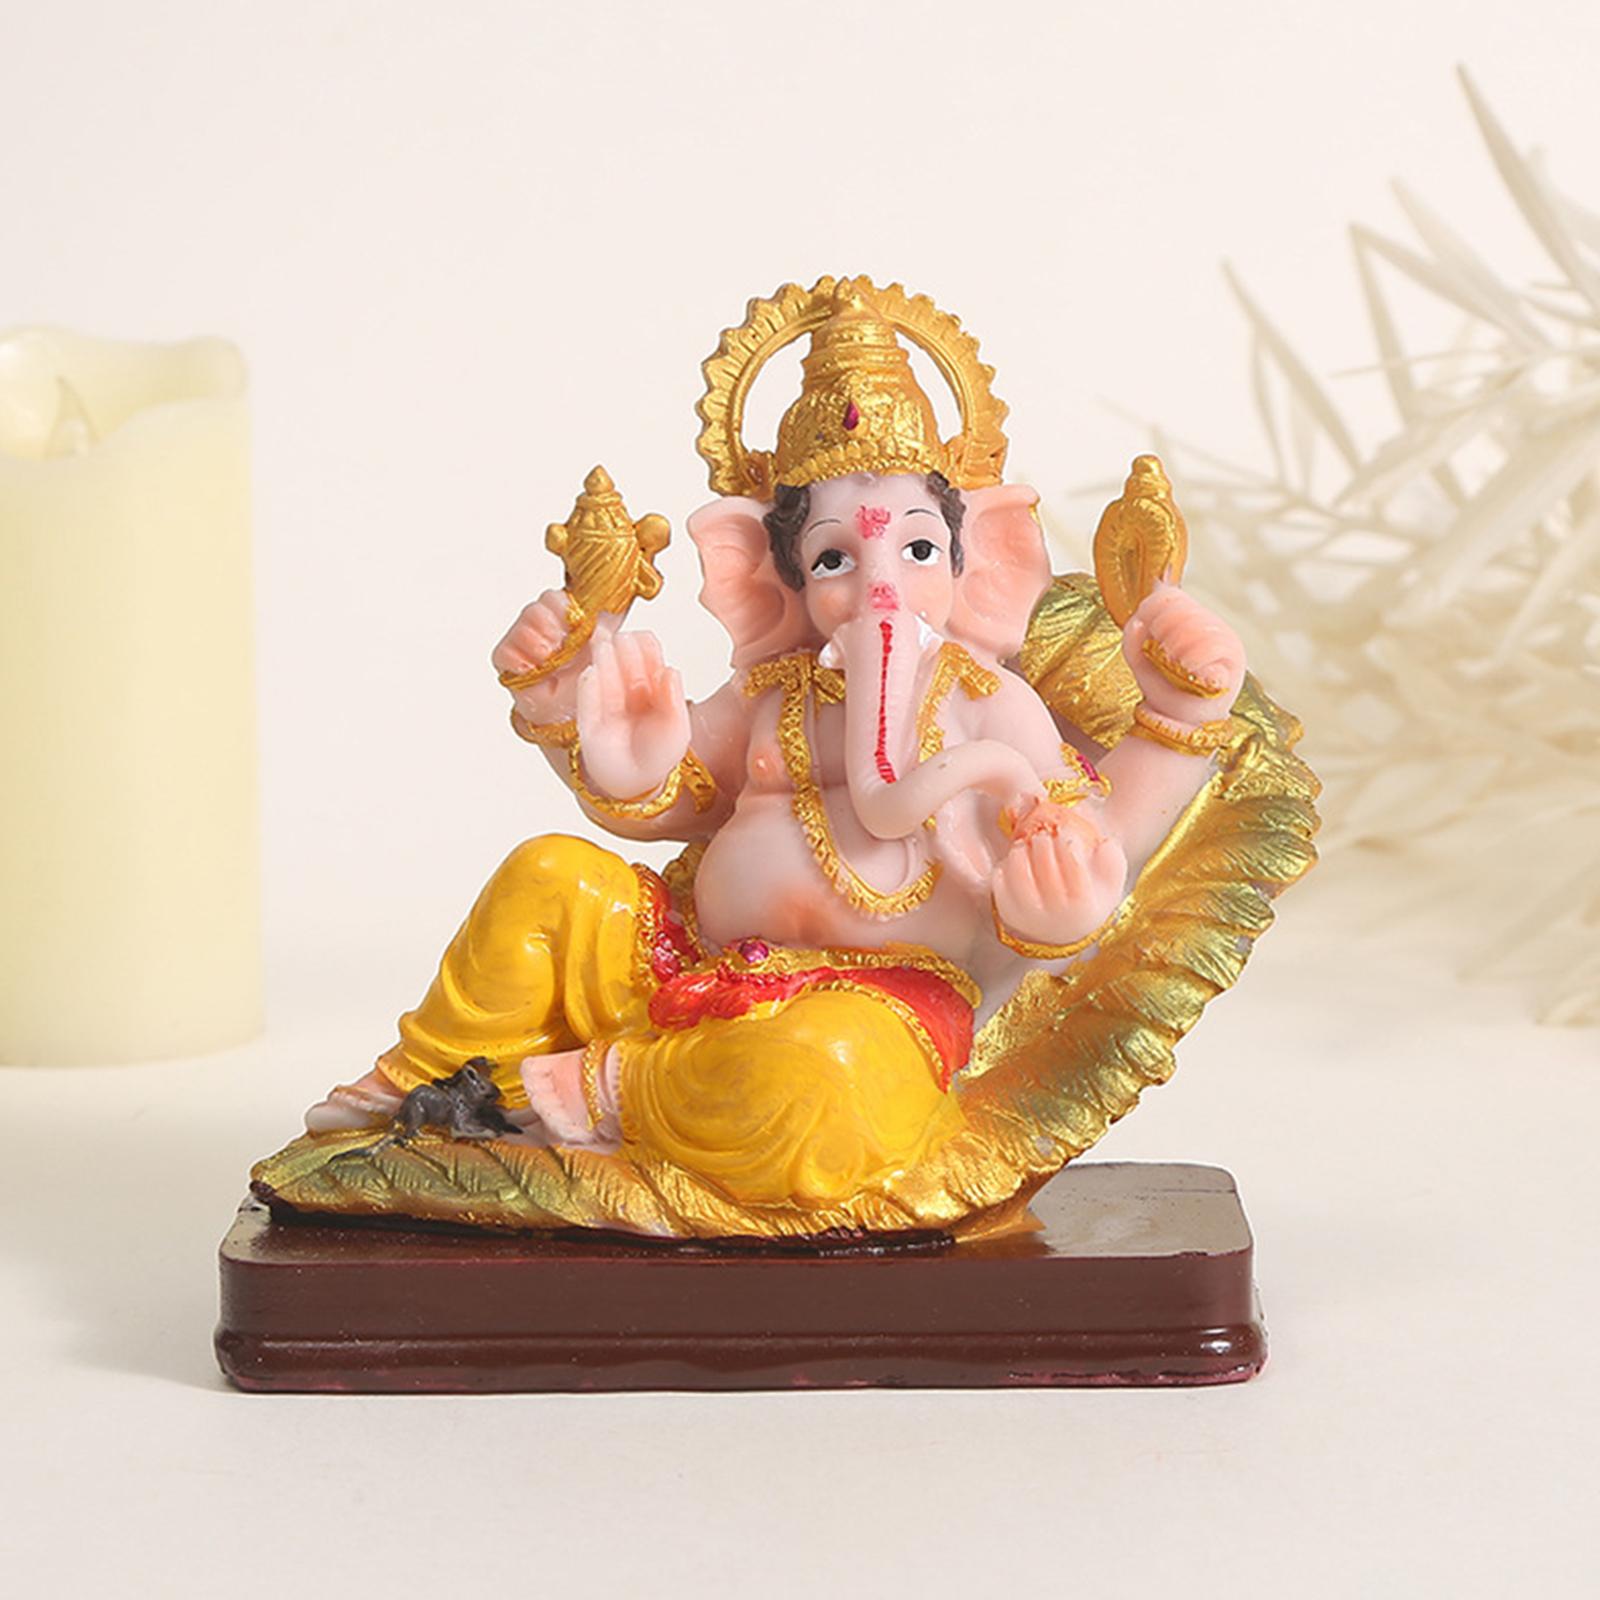 Ganesha Statue Decoration Gift Hindu Elephant God Statue for Home Decoration Style C